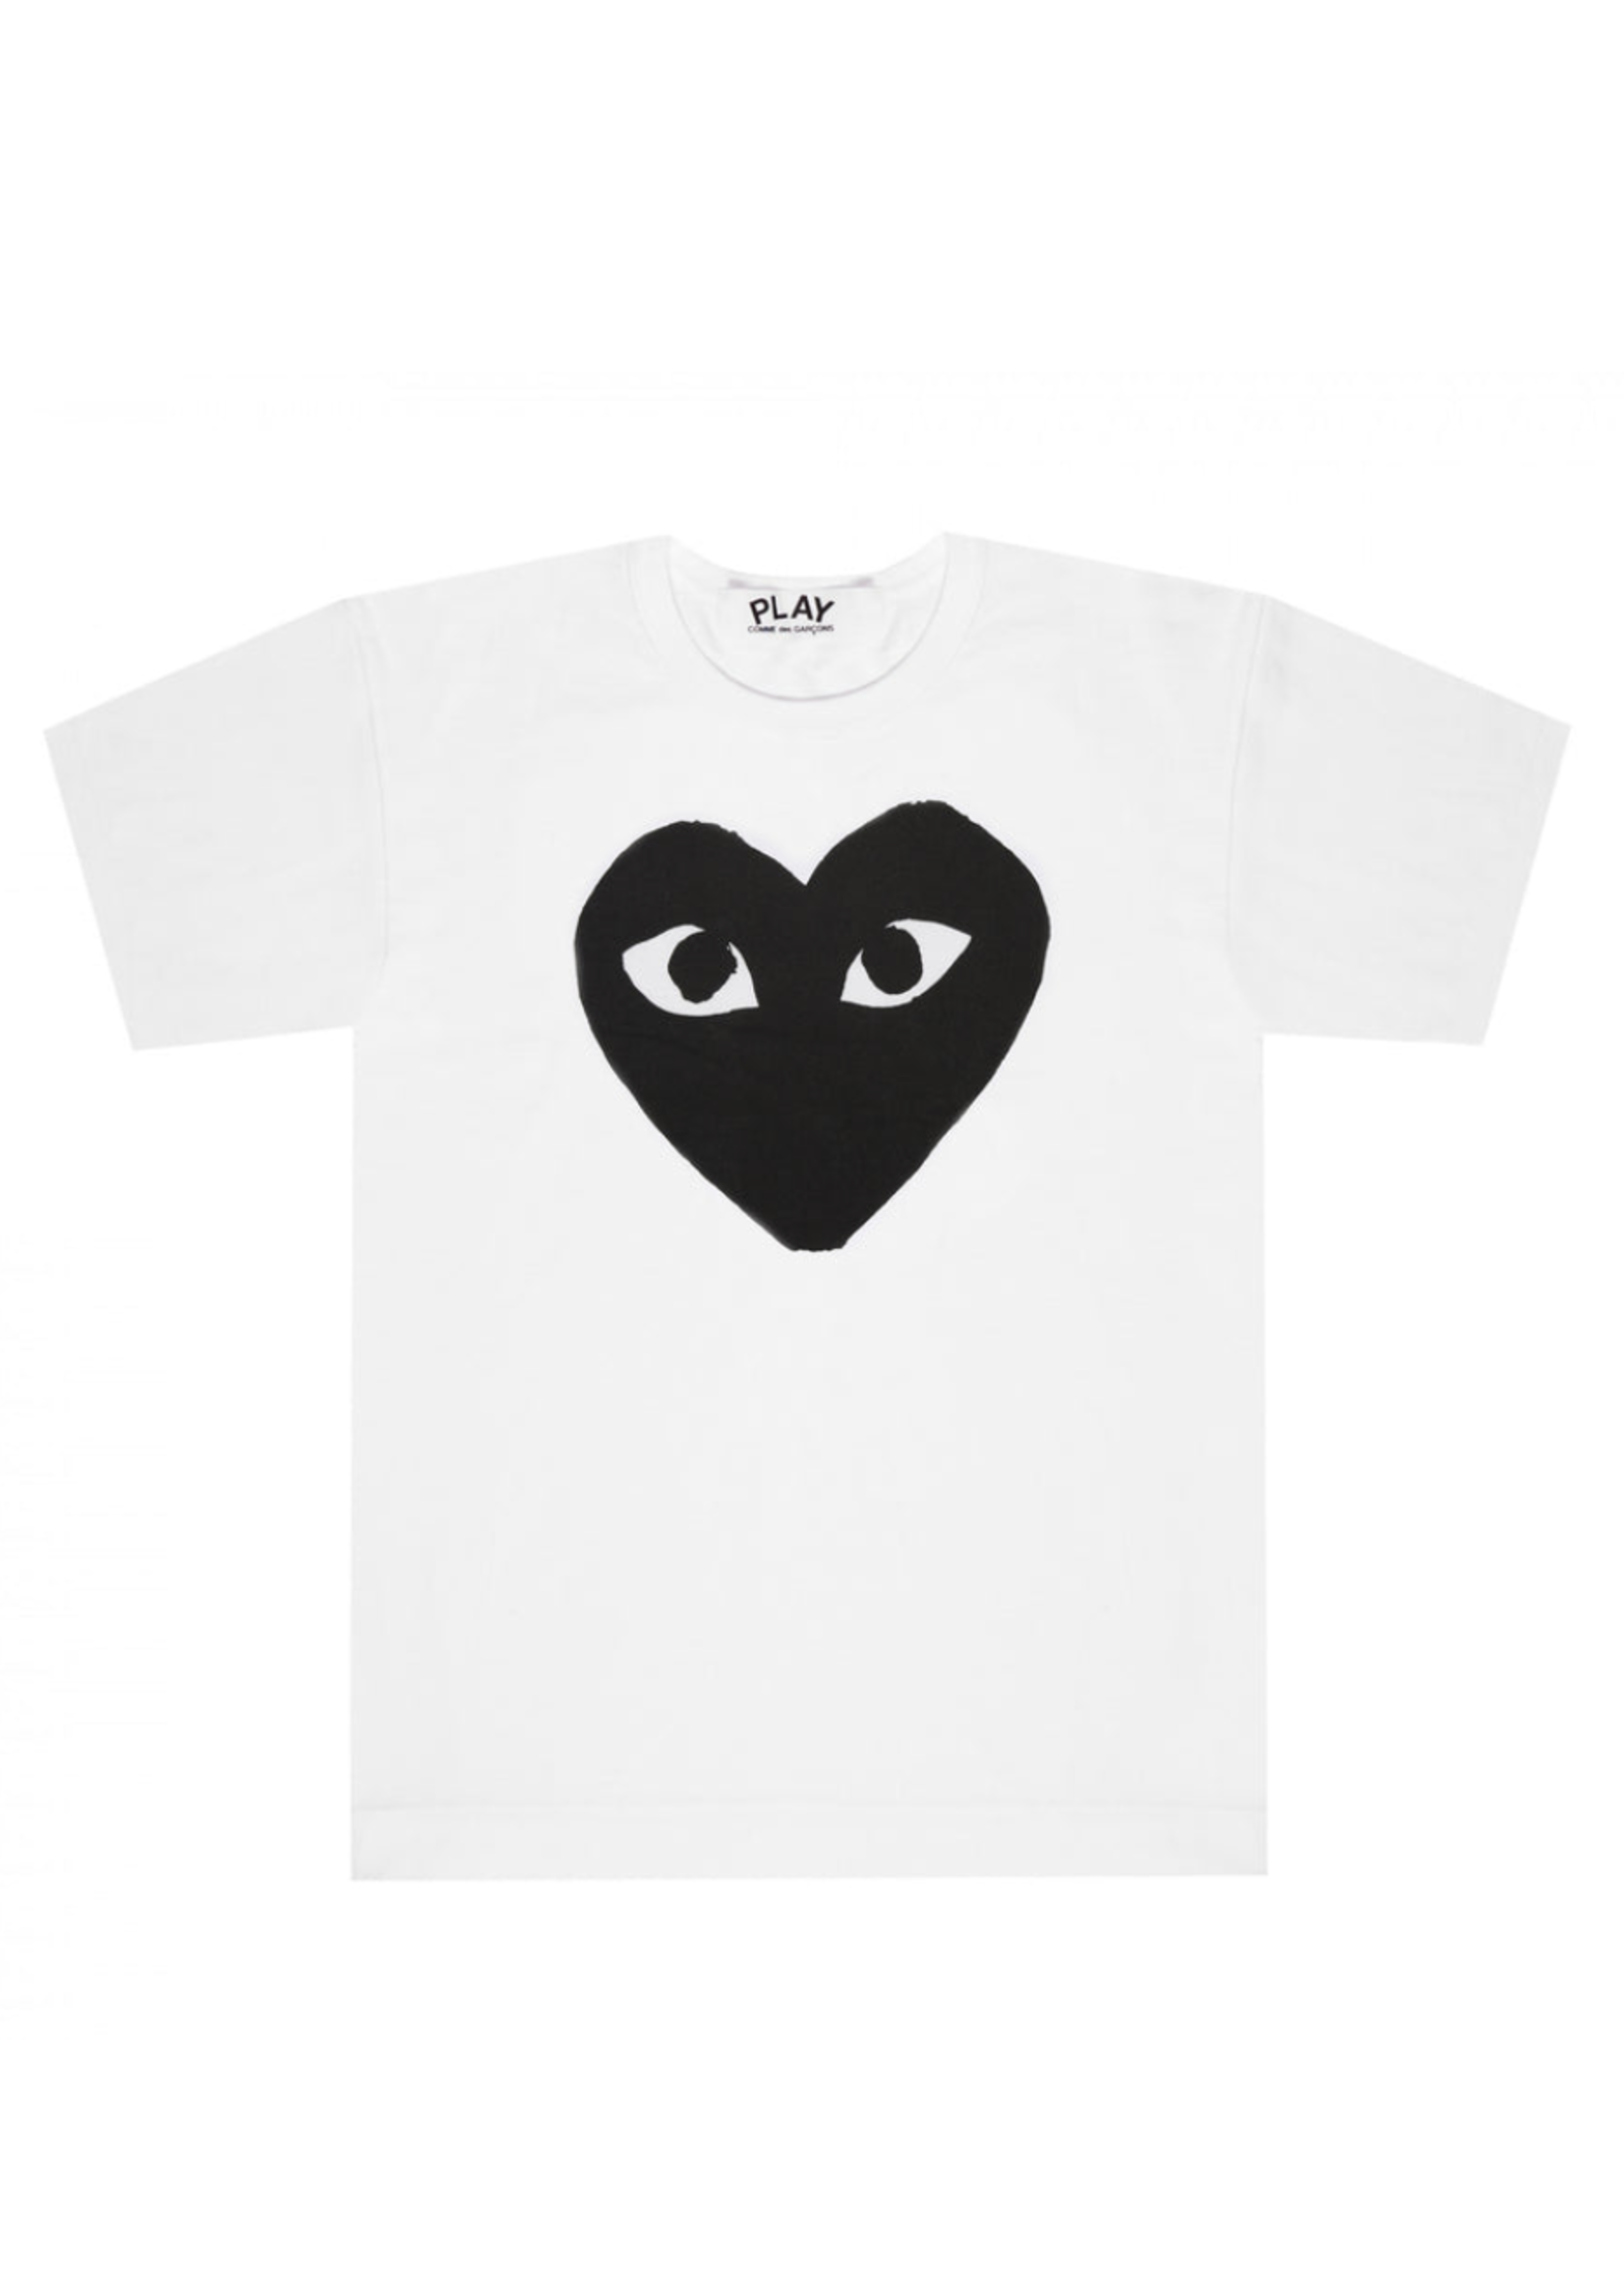 COMME des GARÇONS PLAY Classic Black heart on White T-shirt